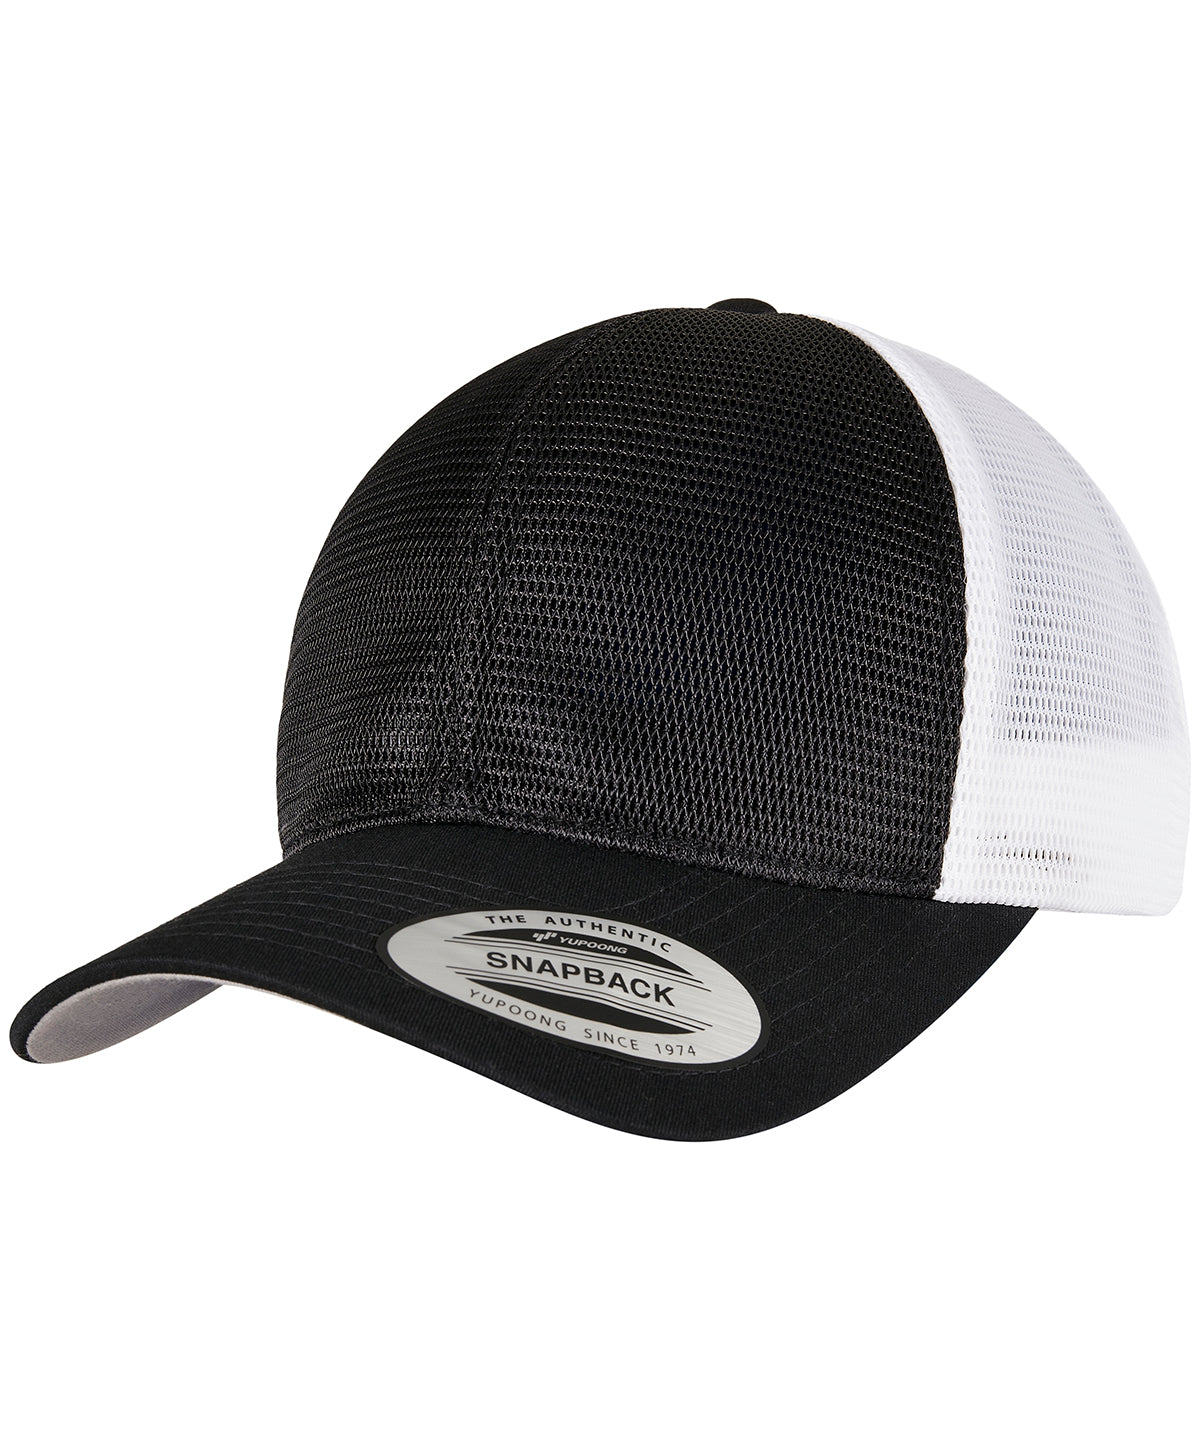 Personalised Caps - Black Flexfit by Yupoong 360° omnimesh 2-tone cap (6360T)